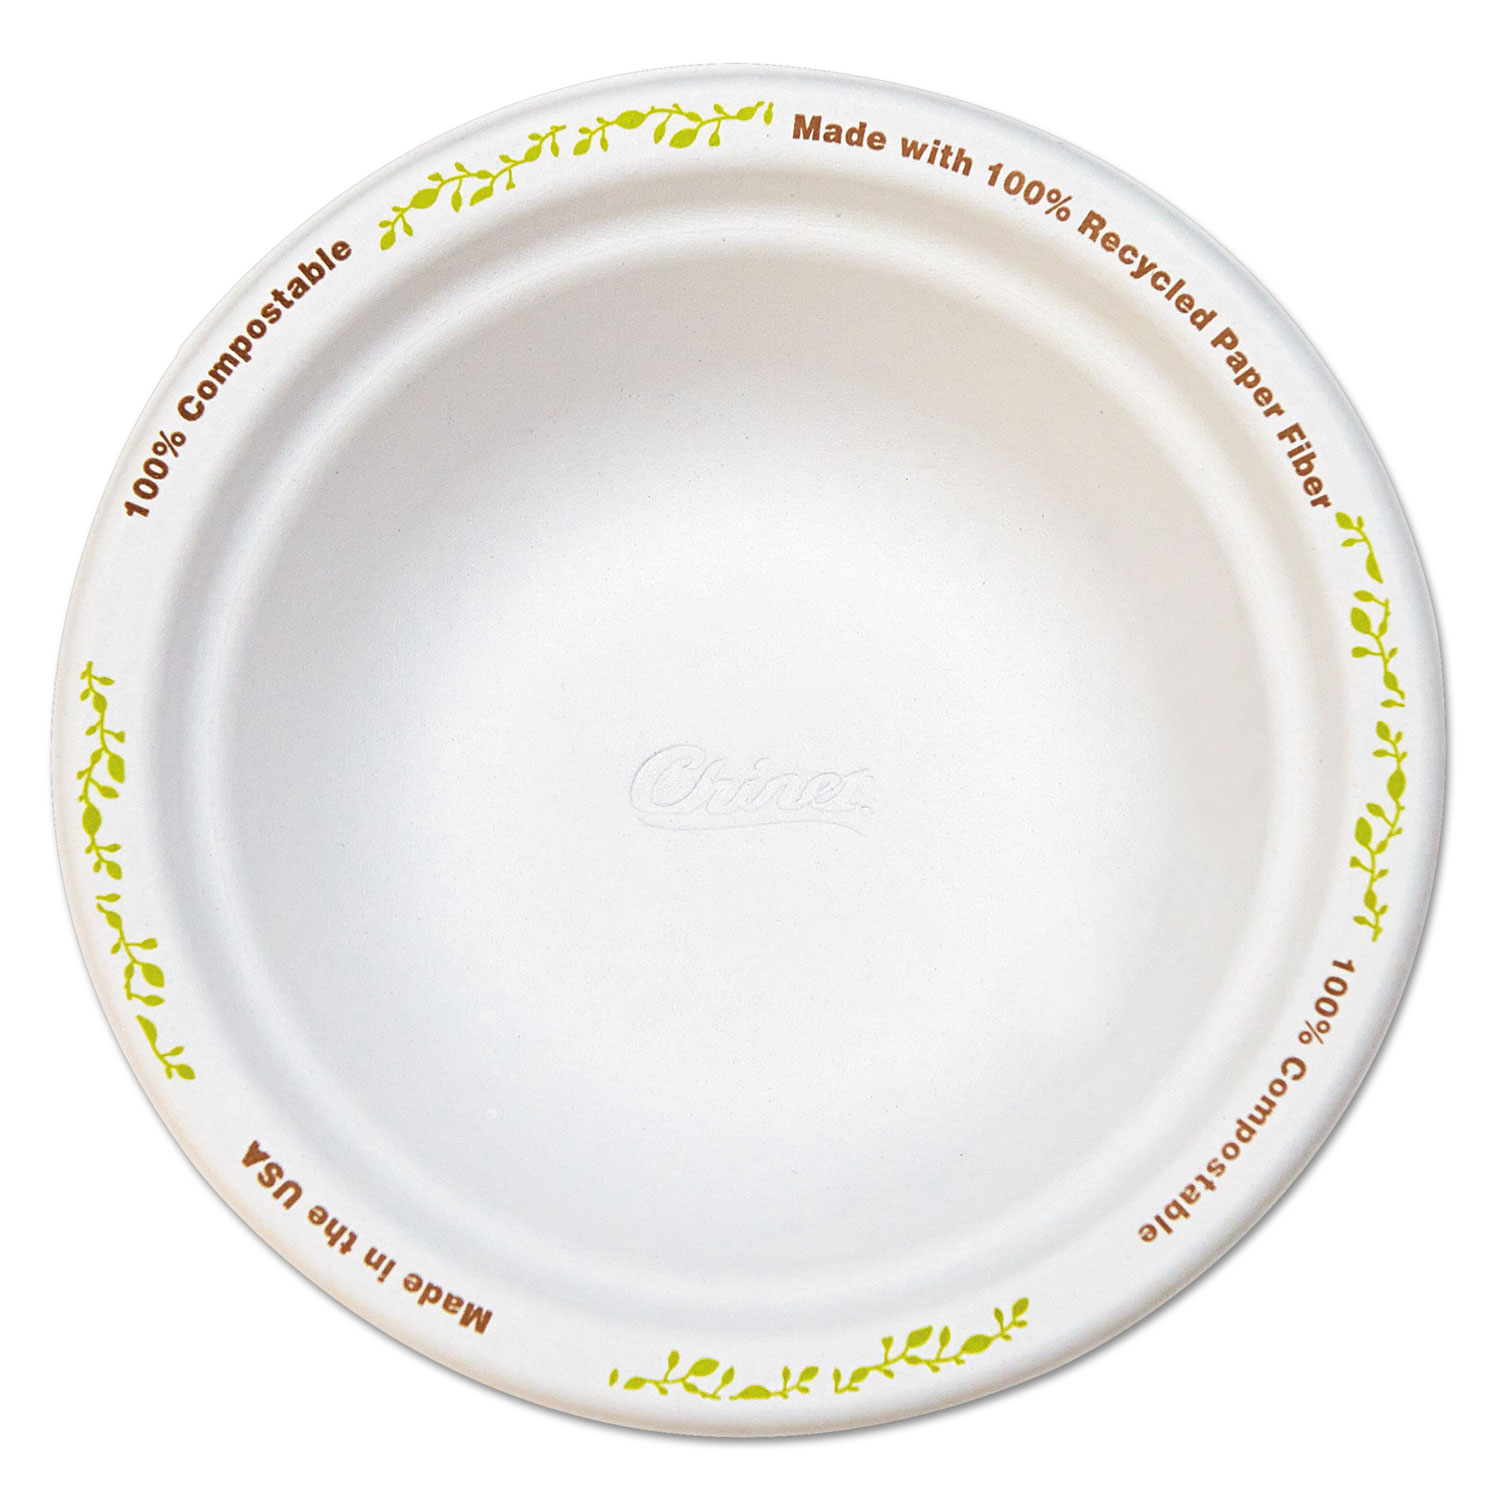  Chinet 22544 Molded Fiber Dinnerware, Bowl, 12 oz, White w/Vine Theme, 1000/Carton (HUH22544) 